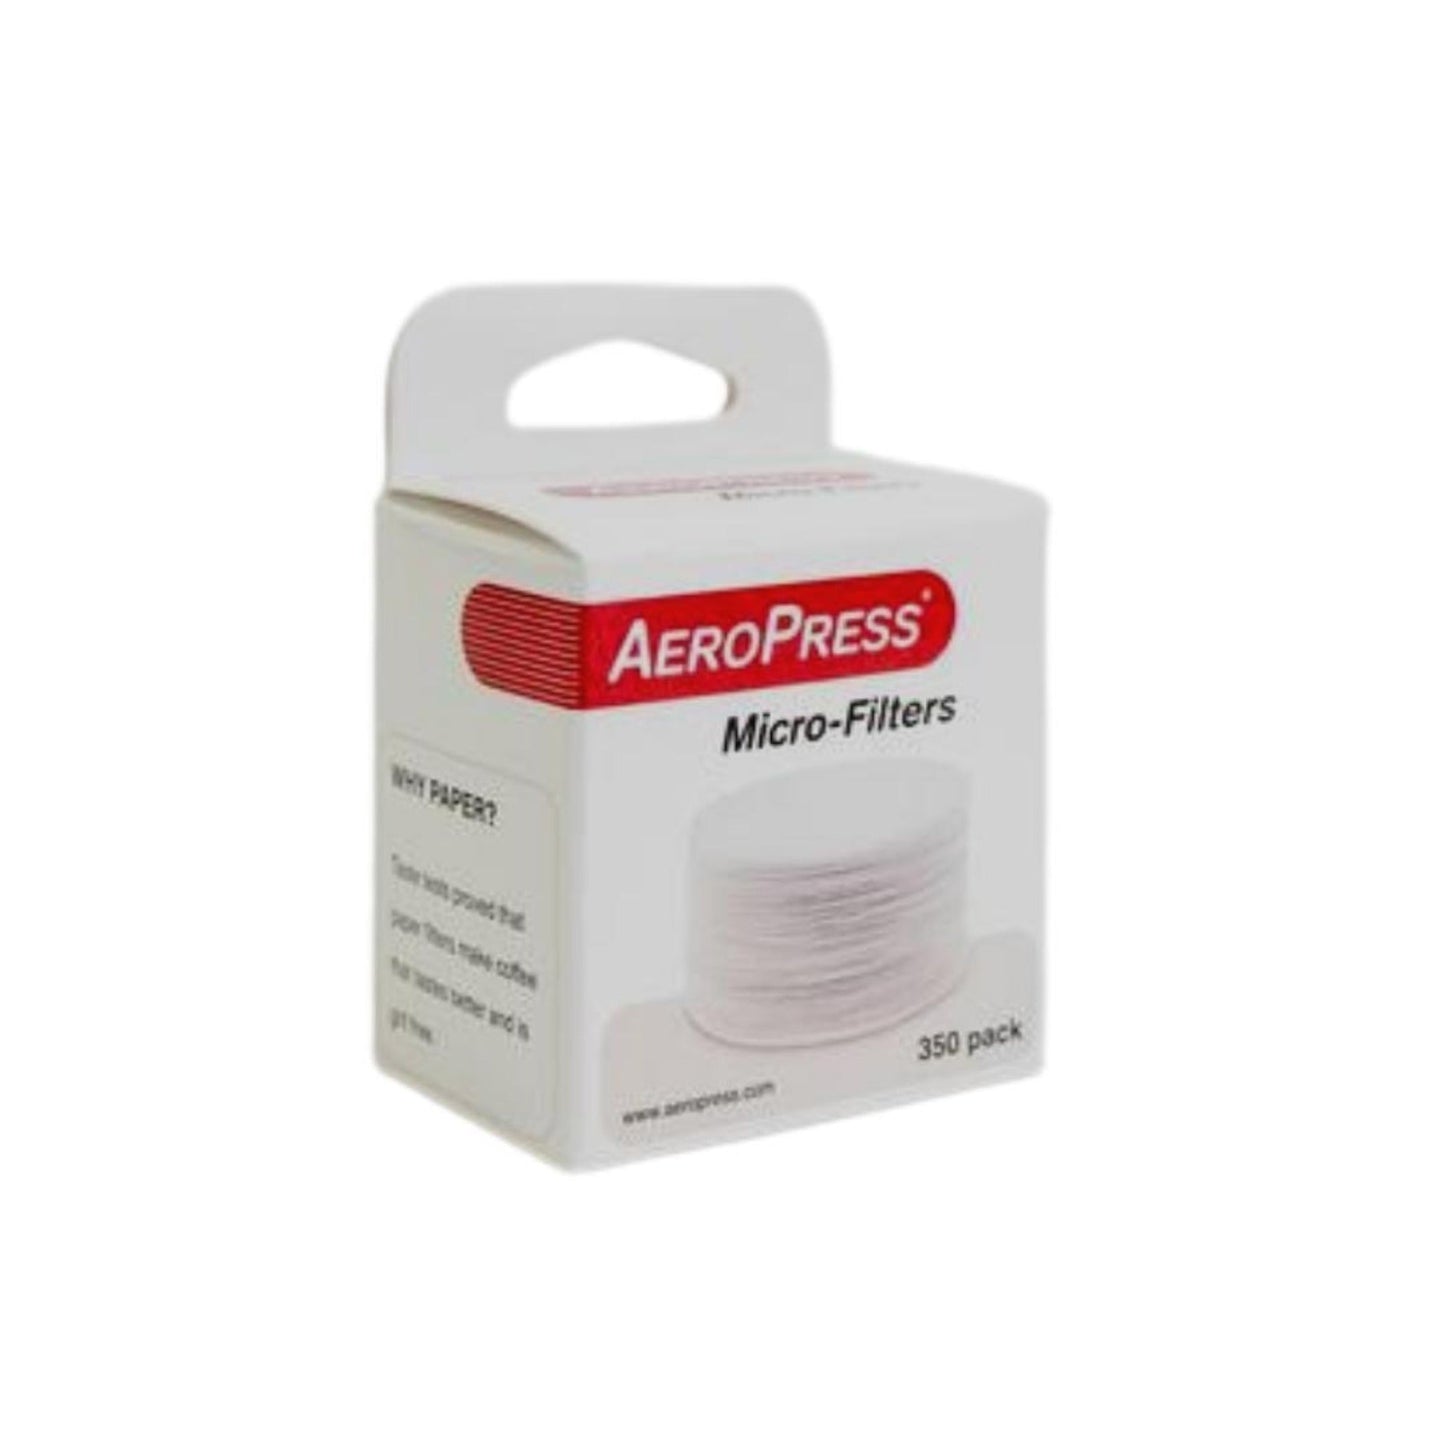 AeroPress Micro-Filter Paper - Small White Box with Aeropress Micro Filters printed  on front -Velo Coffee Roasters